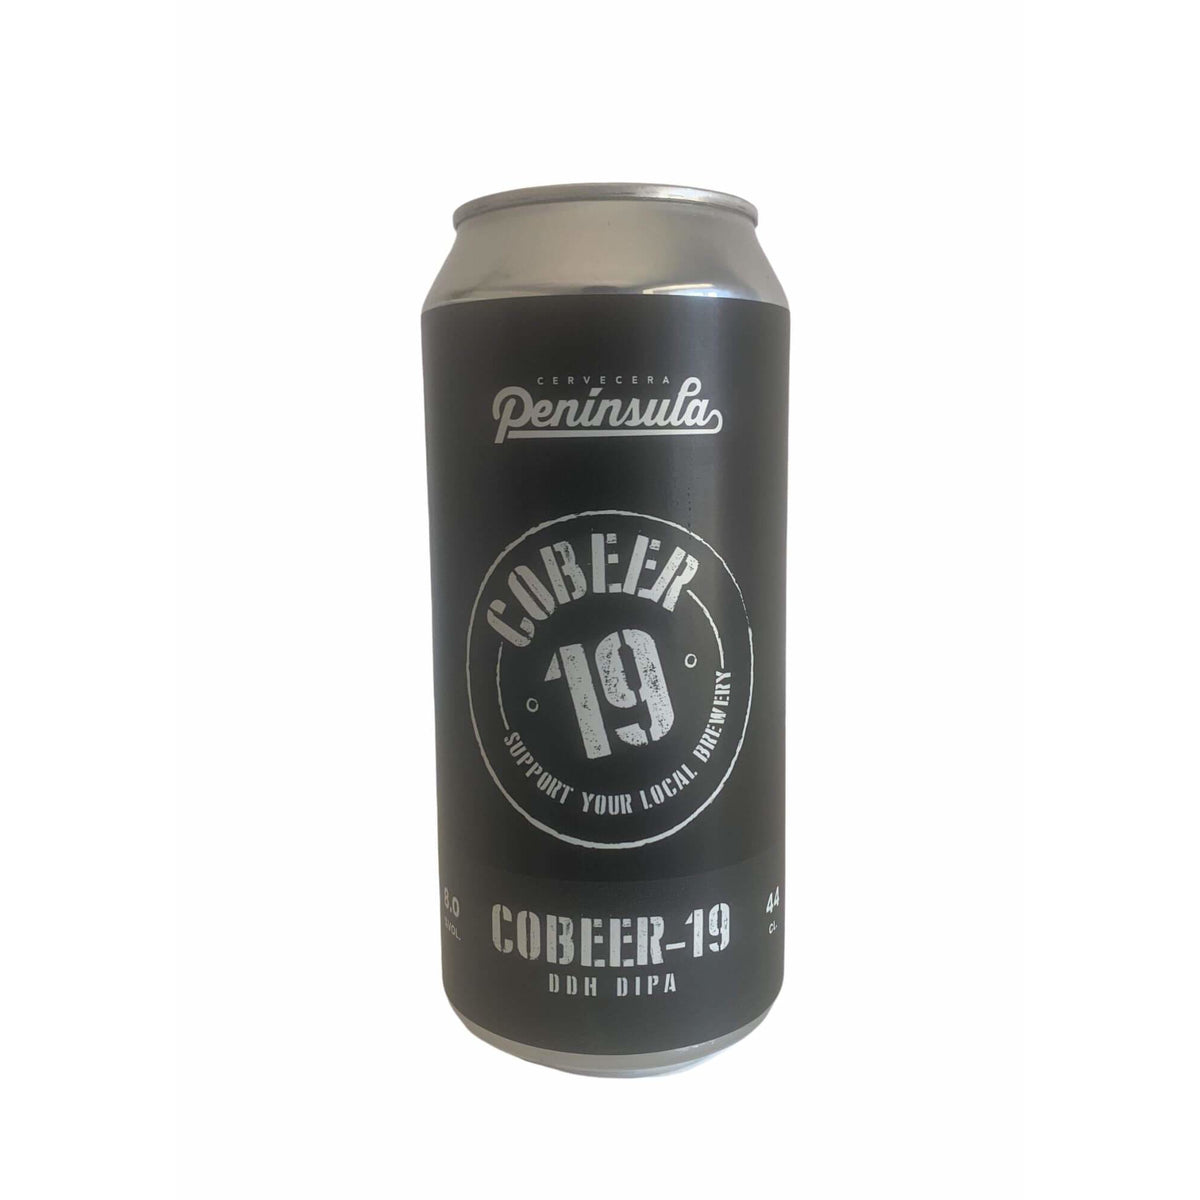 Cobeer 19 | Cervecera Península - Cans & Corks